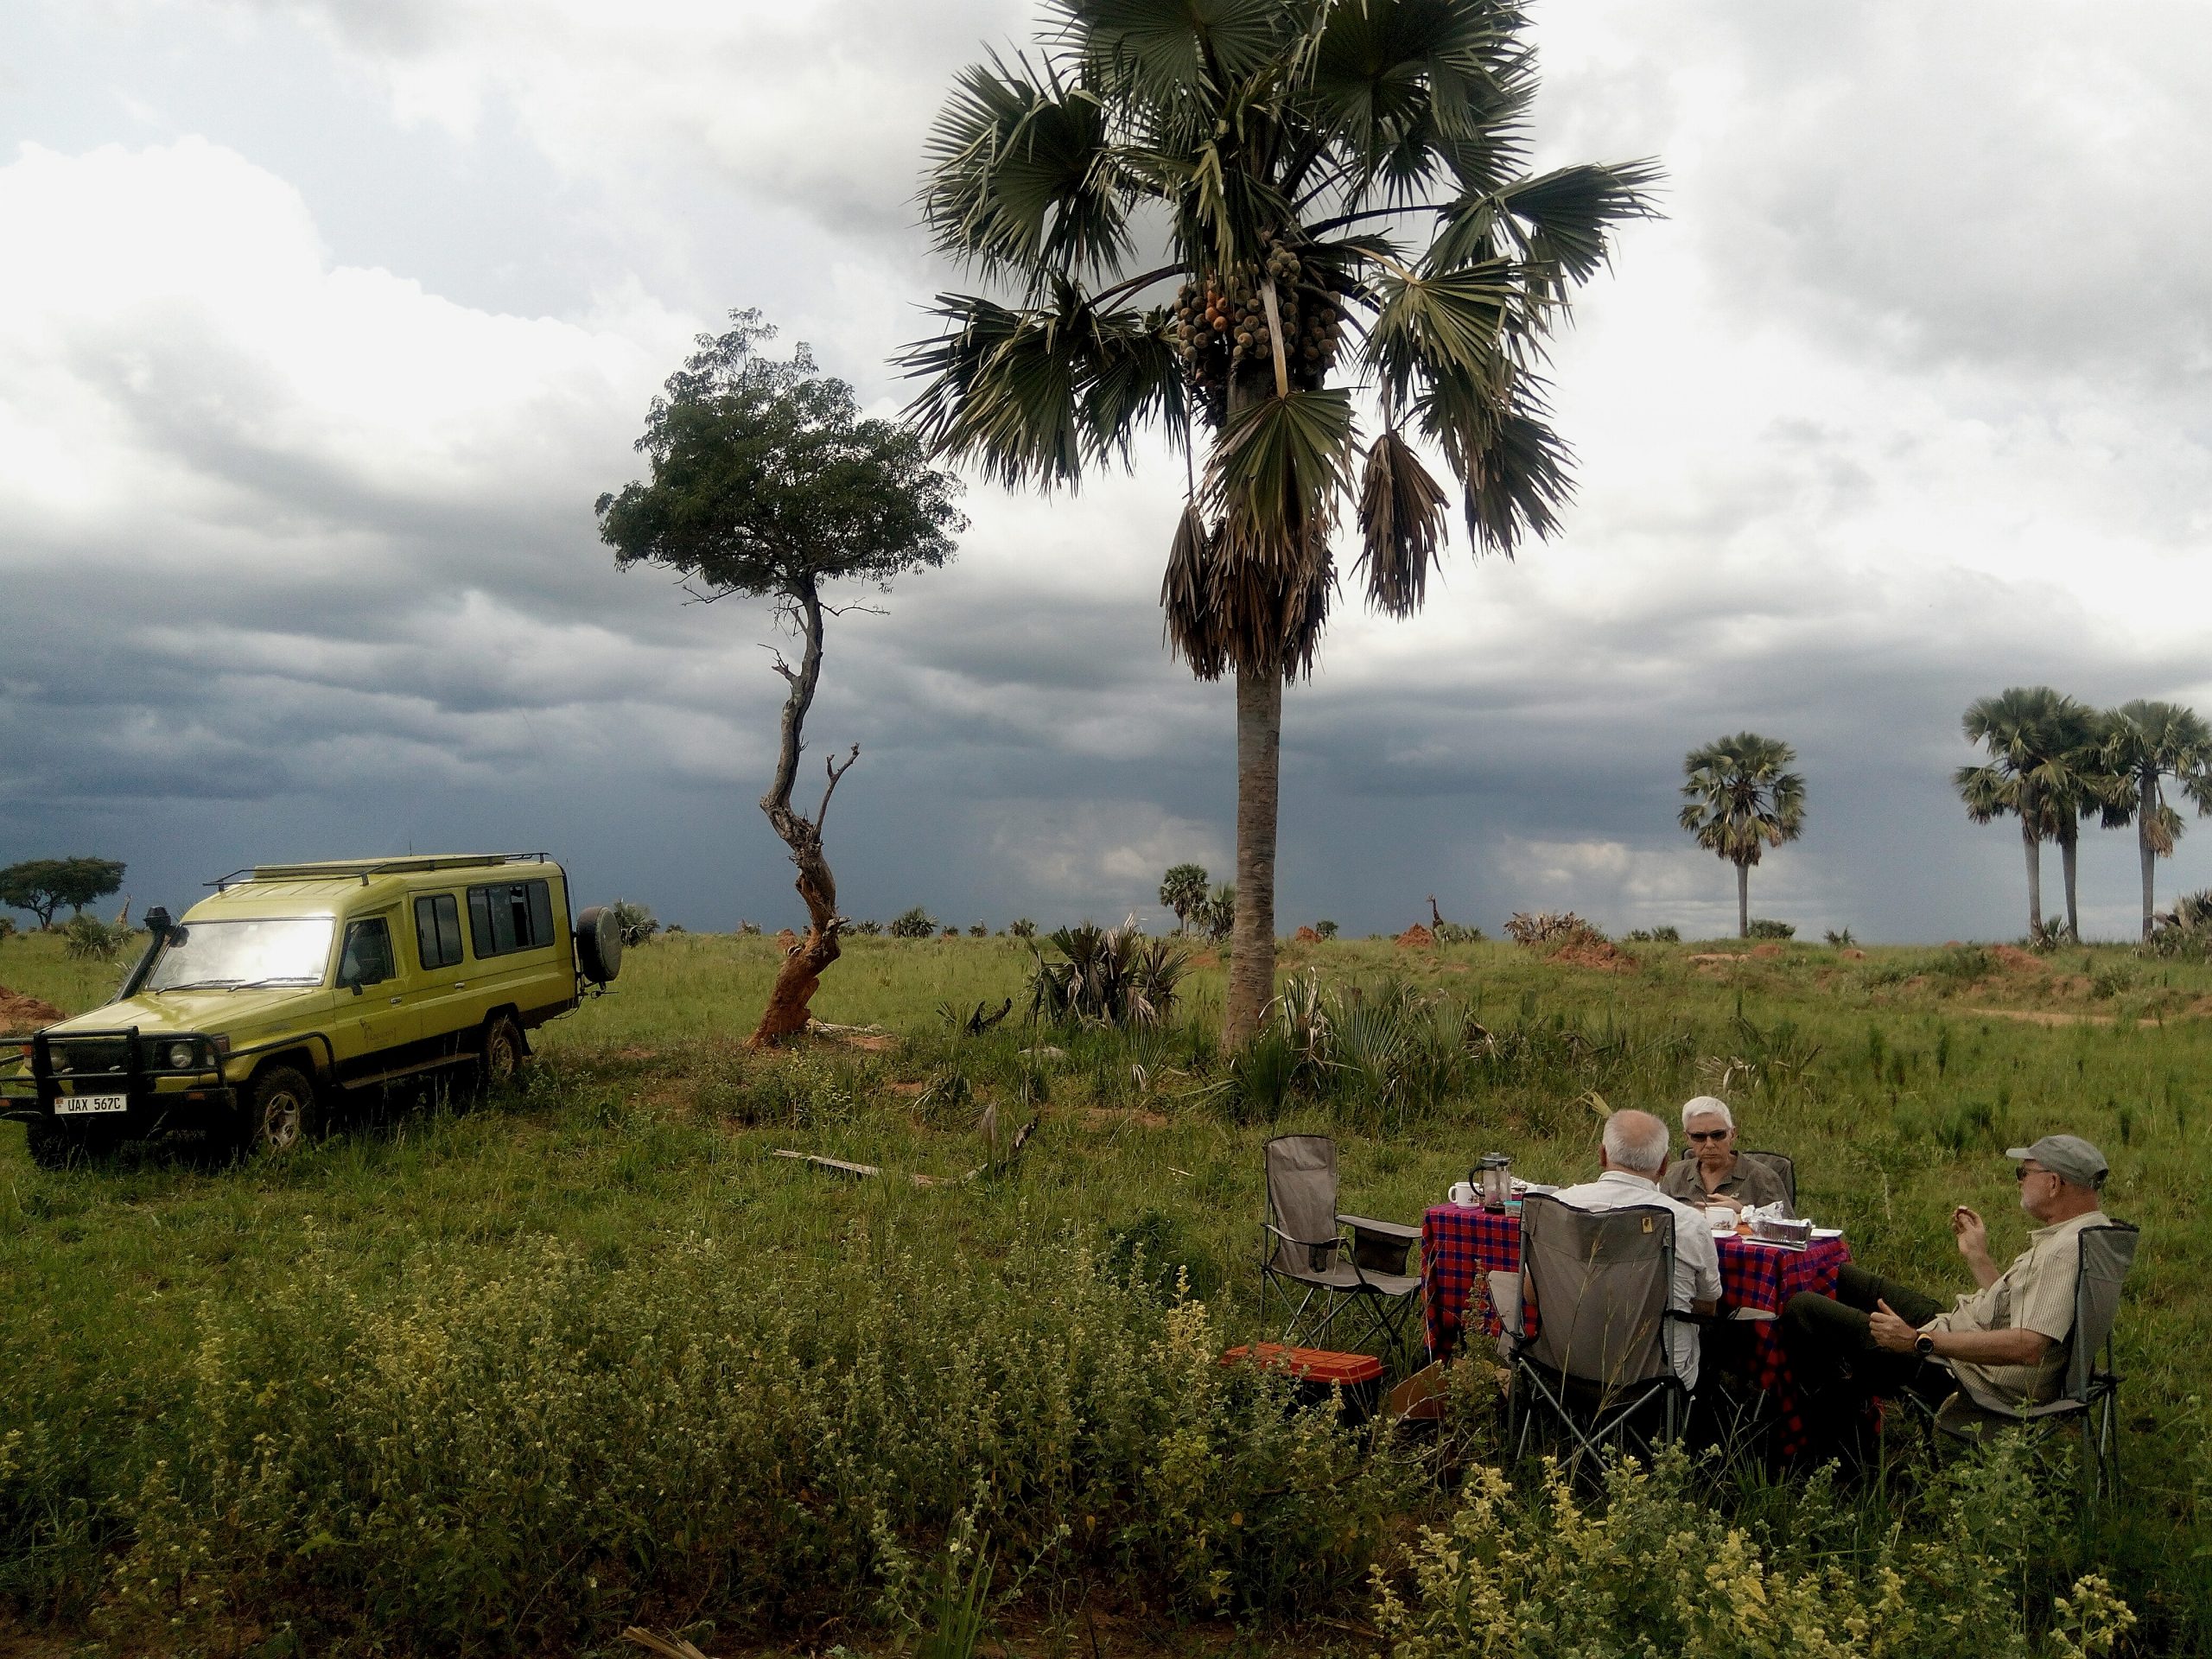 Camping gear/euipment for hire in Uganda